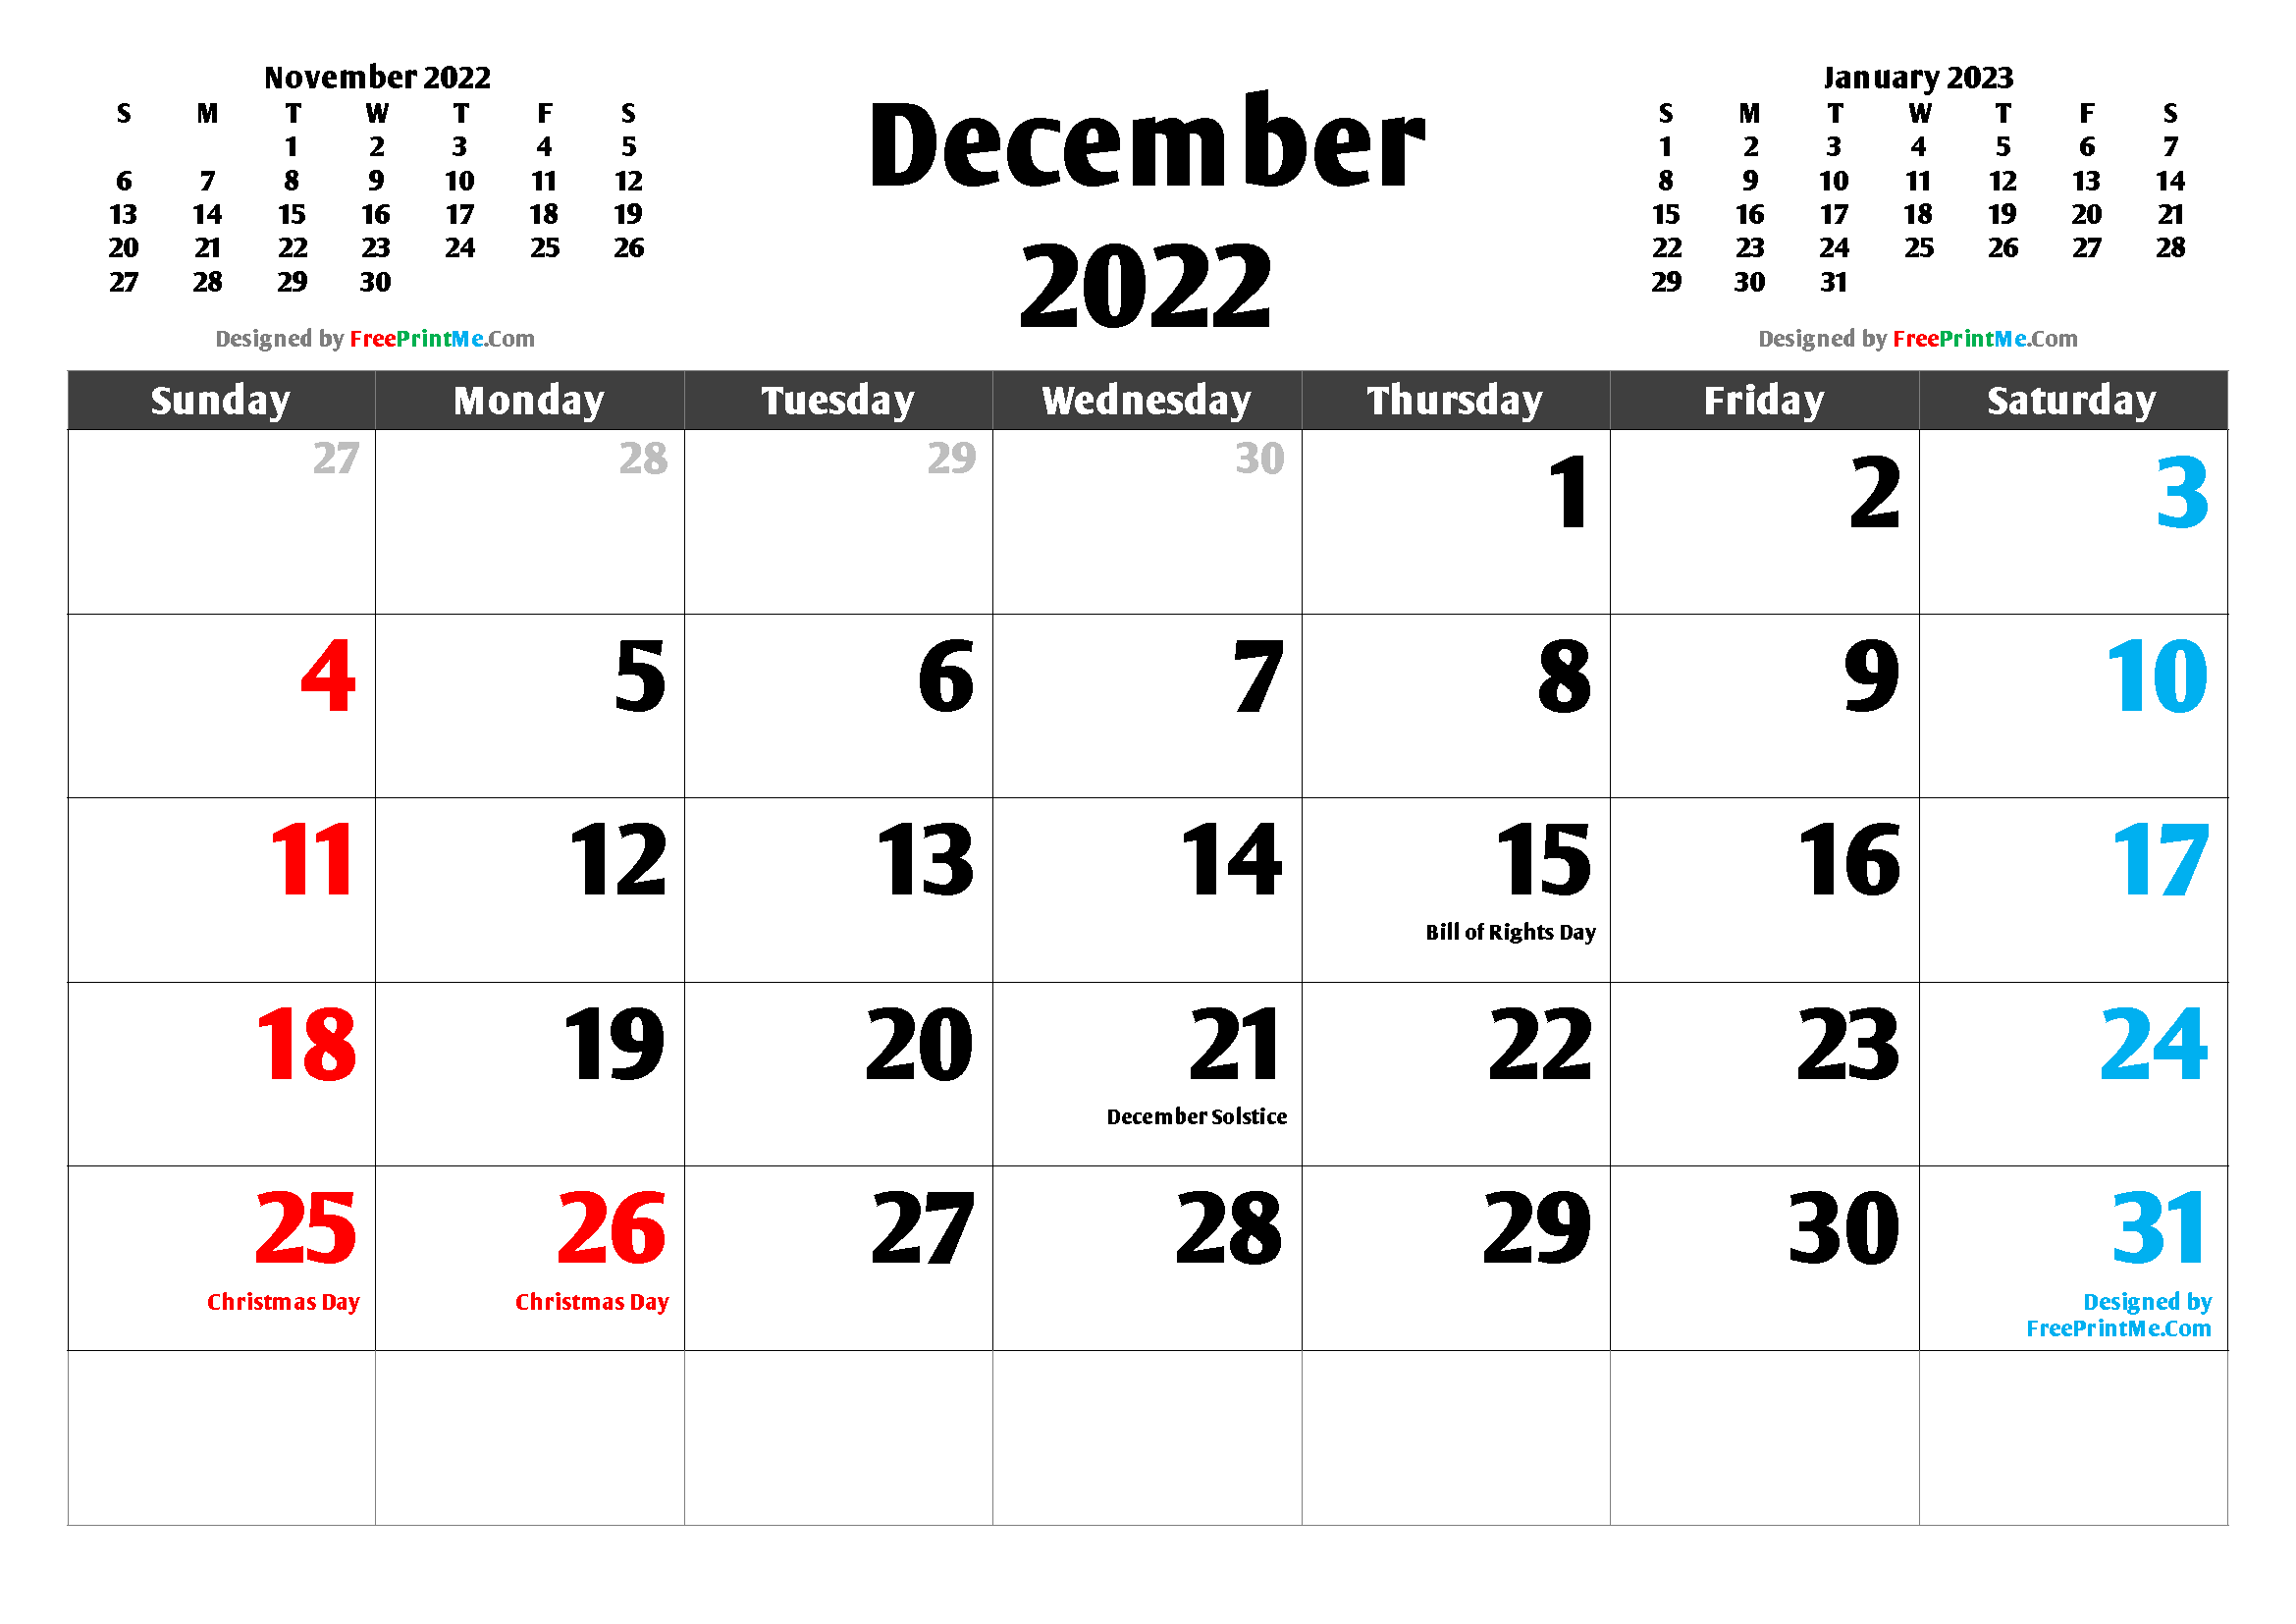 Dec 2022 Calendar Free Printable December 2022 Calendar Pdf, Png Image